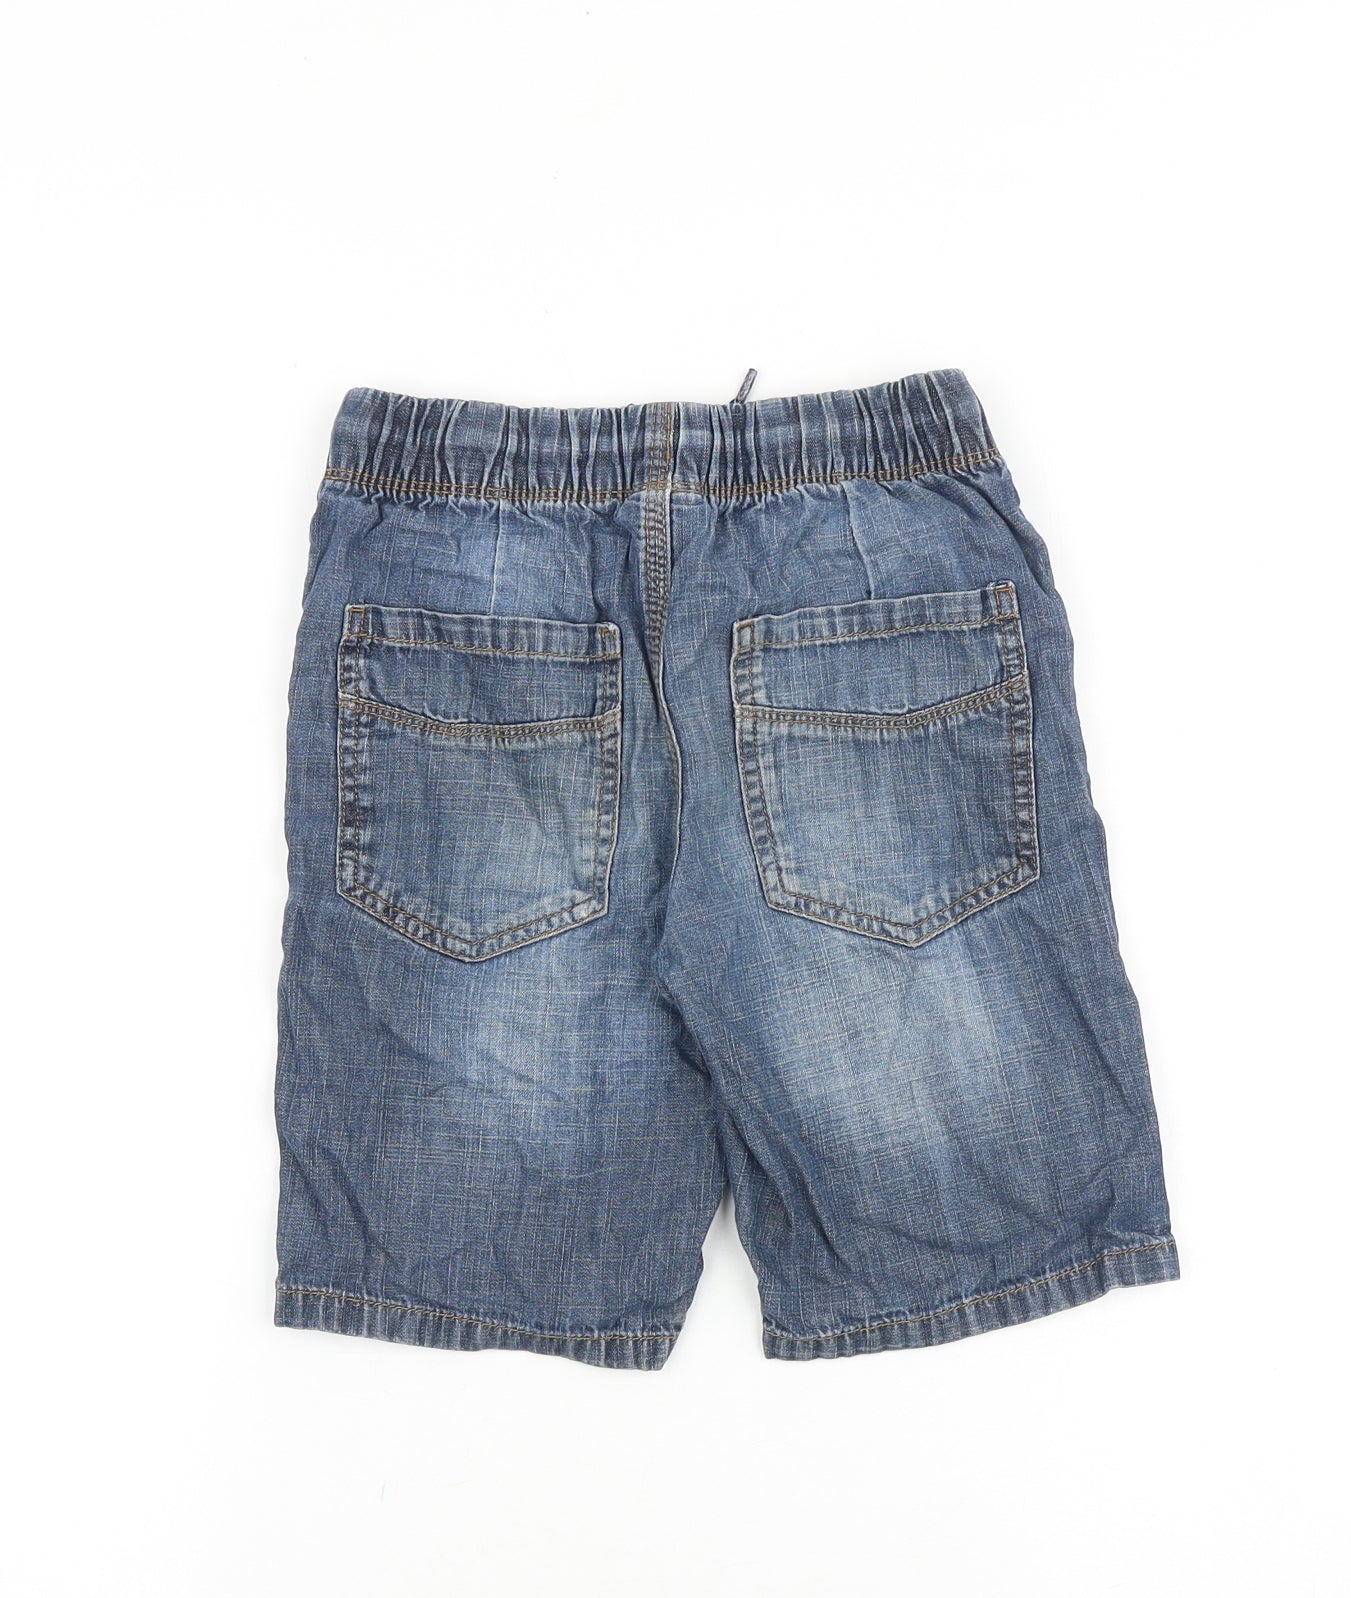 NEXT Boys Blue Cotton Bermuda Shorts Size 8 Years Regular Drawstring